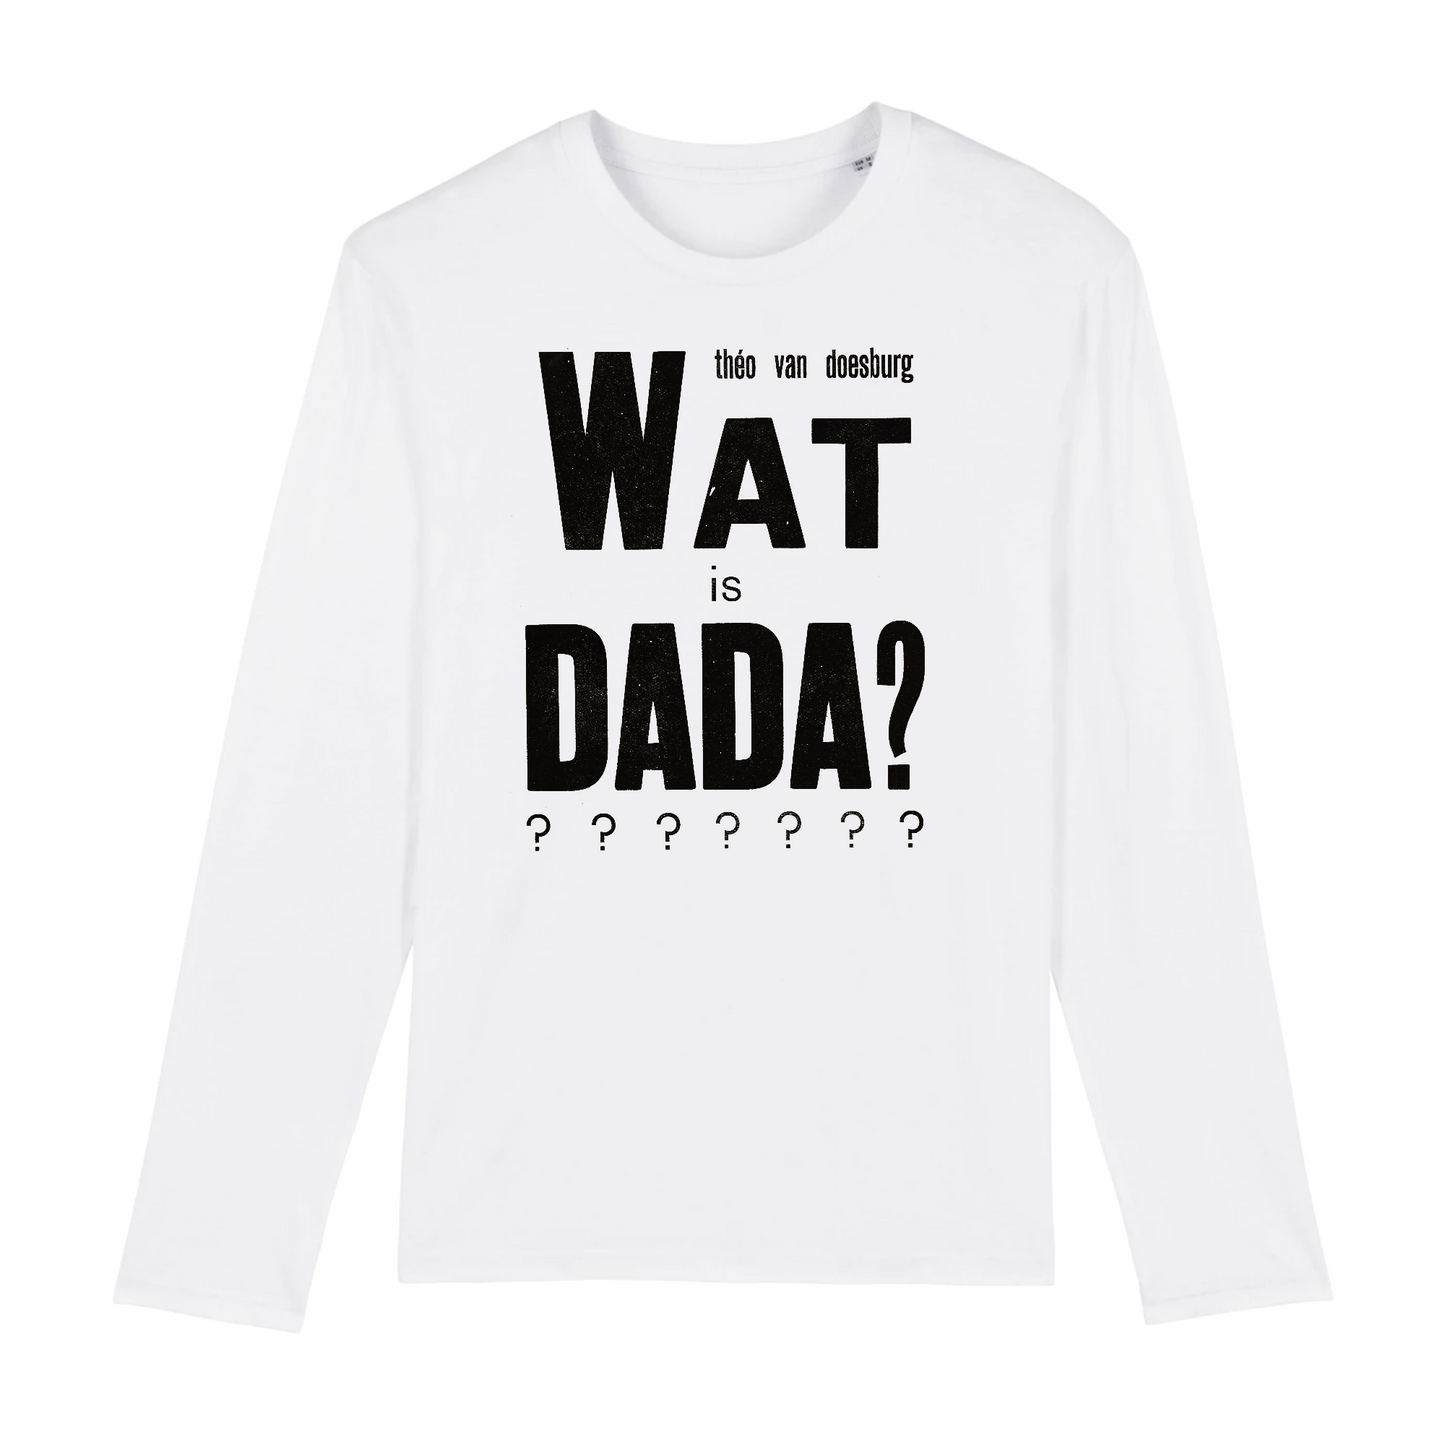 Wat is Dada by Theo van Doesburg, 1923 - Long-Sleeve Organic Cotton T-Shirt